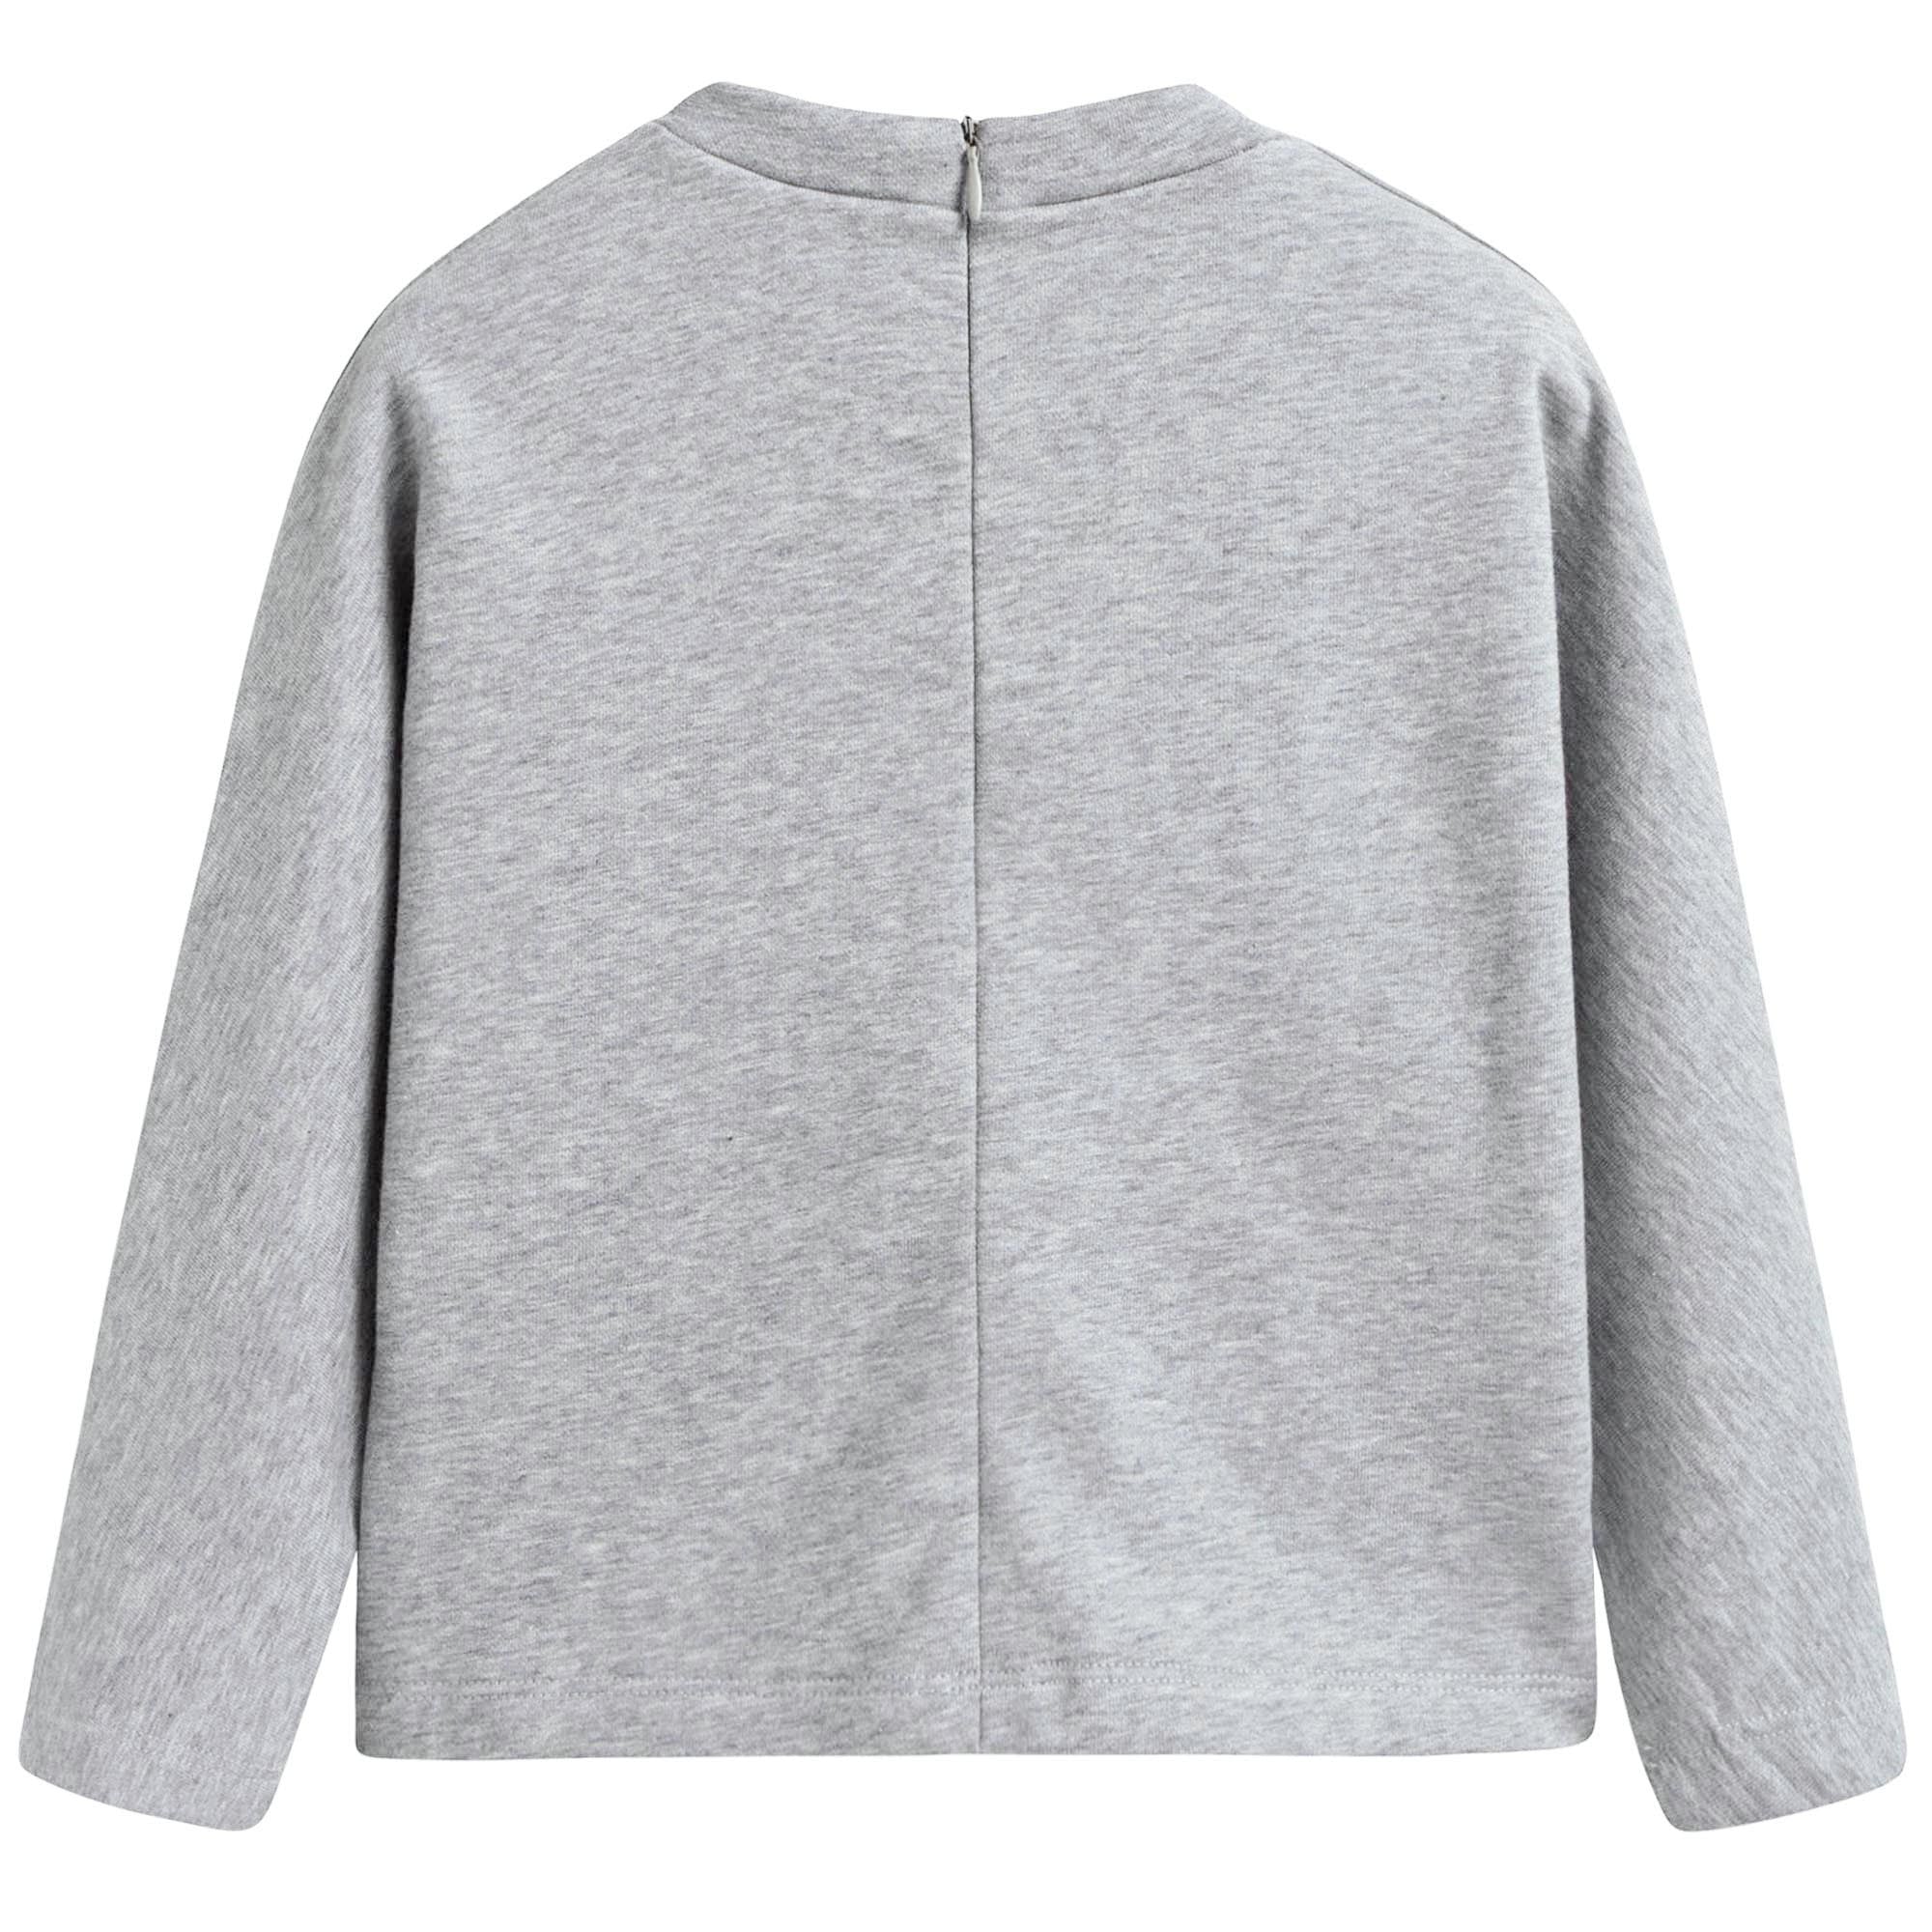 Girls Grey Cotton Sweatshirt